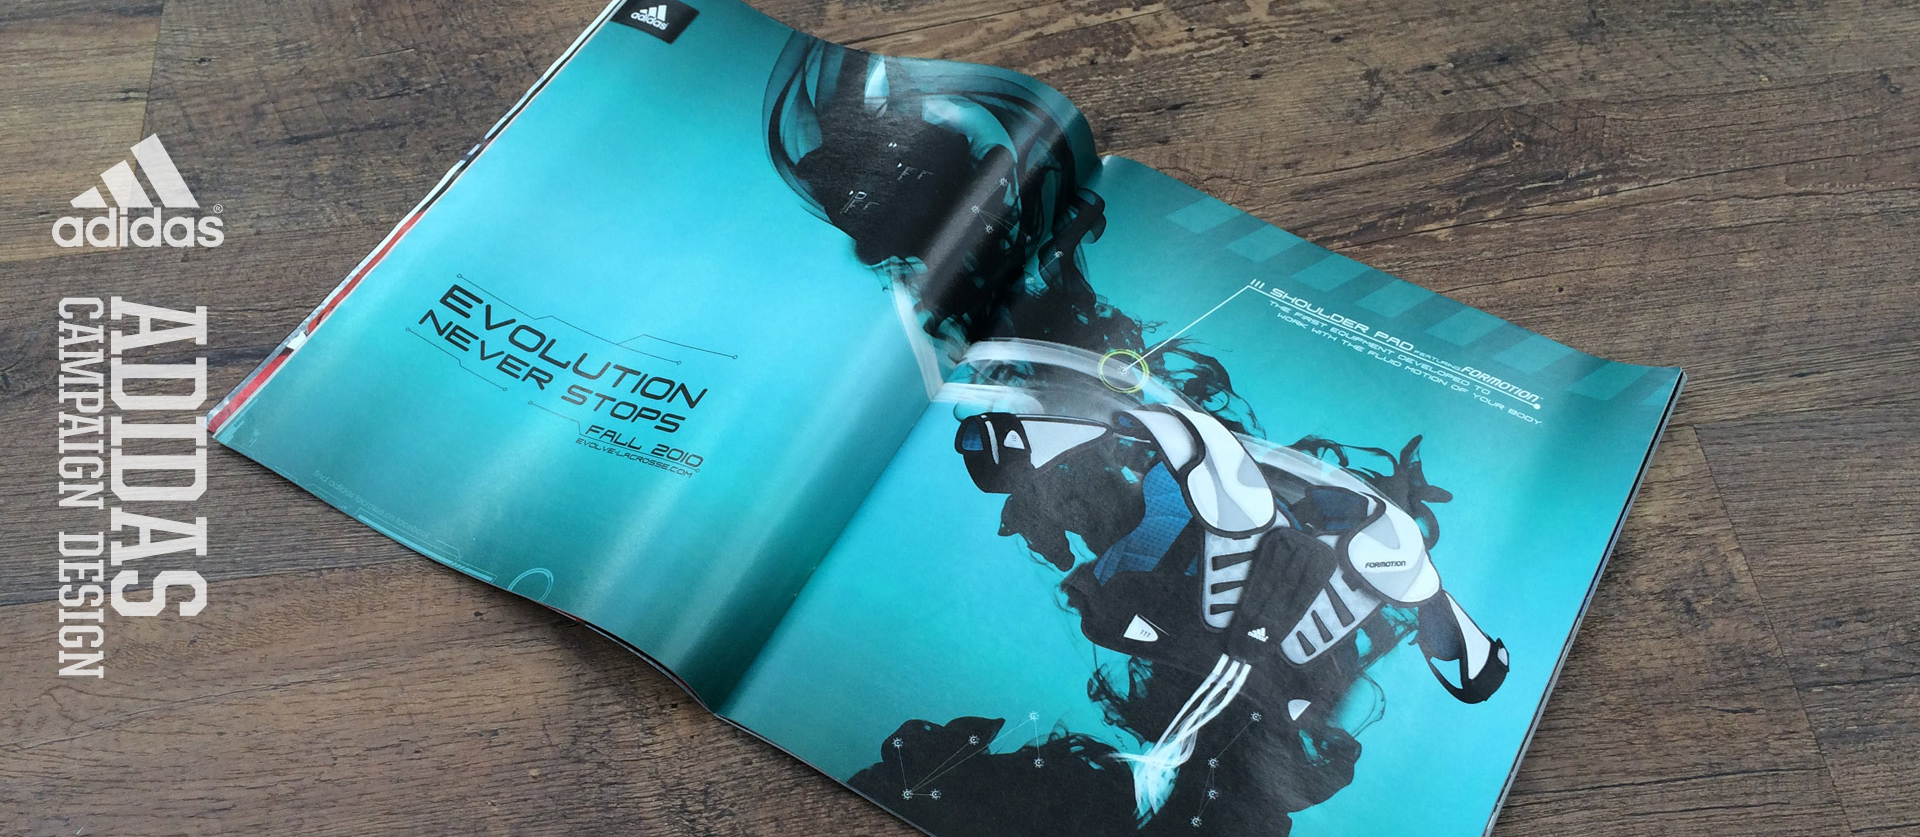 graphic design campaign for adidas lacrosse